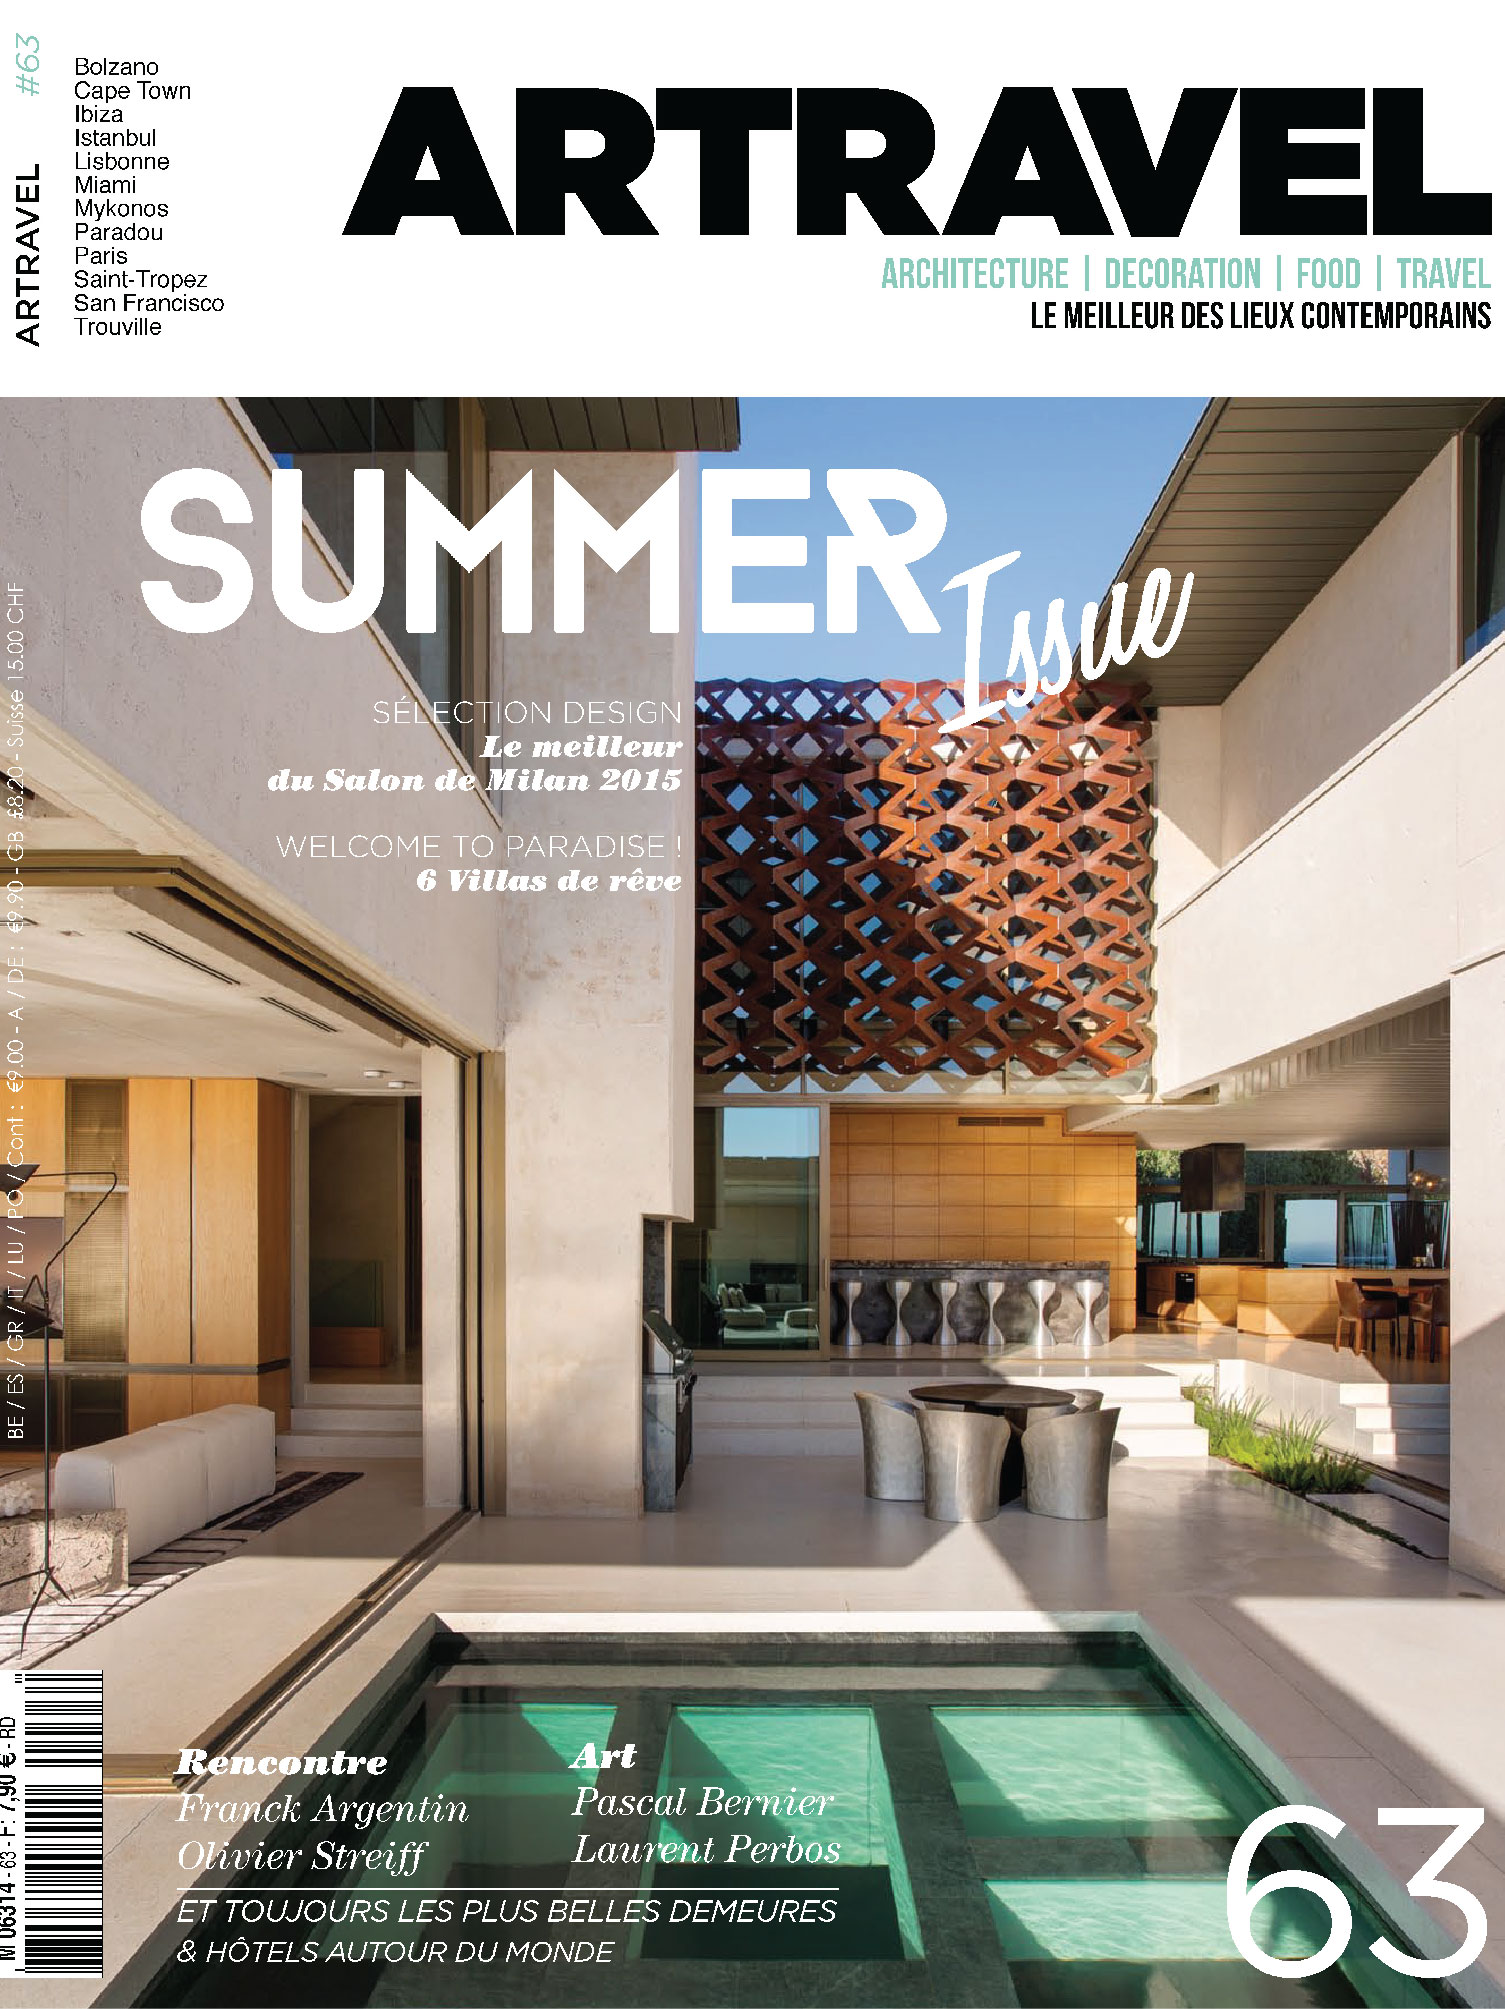 cover of the magazine artravel june 2015